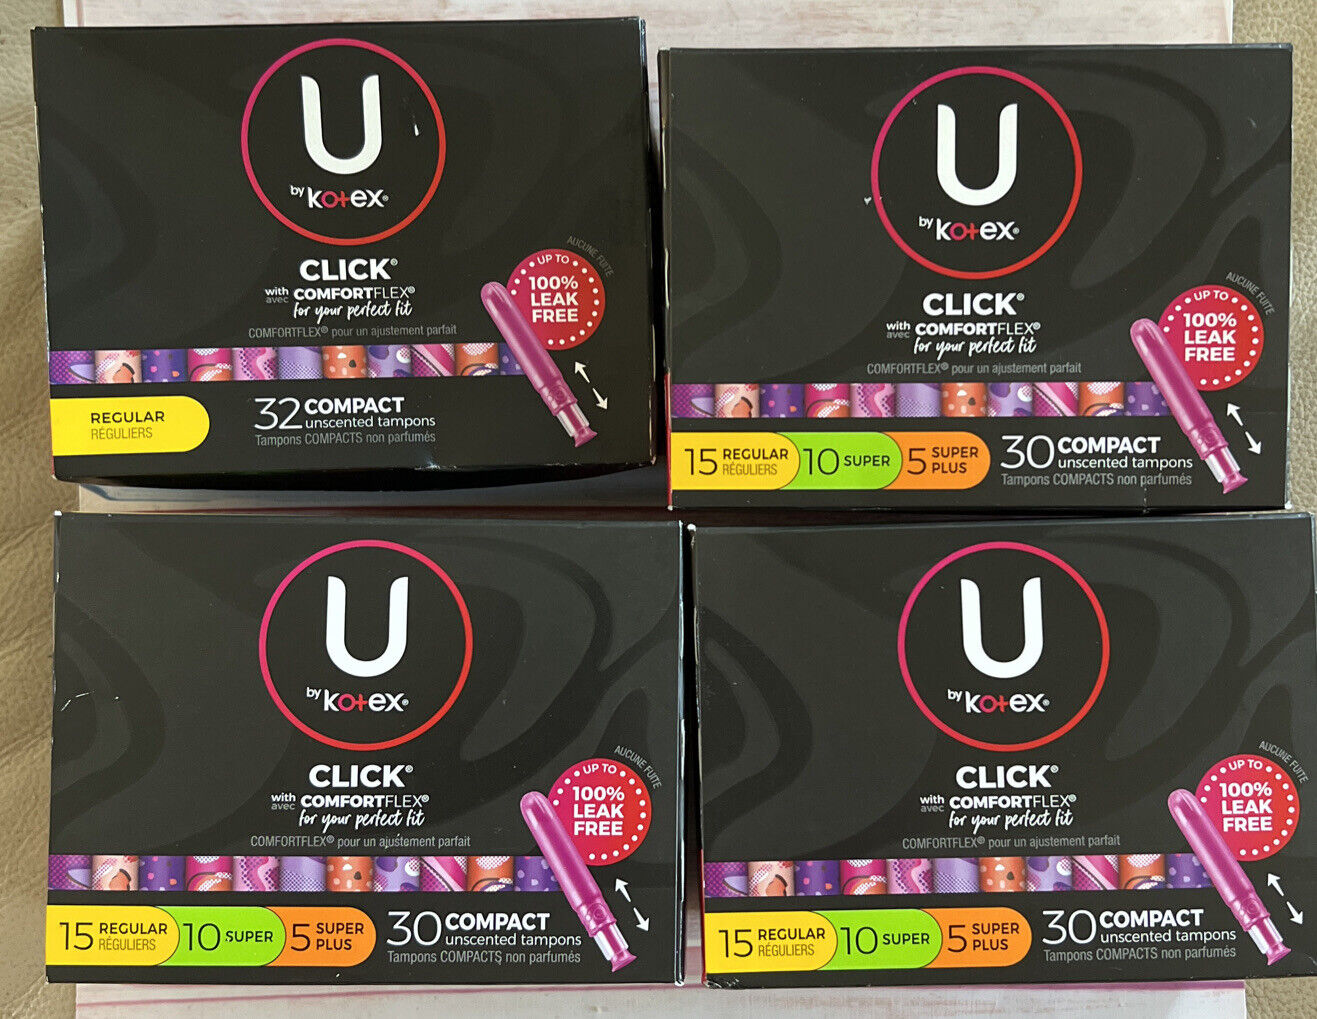 U by Kotex~Click Compact Tampons - 3 Multi Packs 30 & 1 - 32 Regular Pack U by Kotex